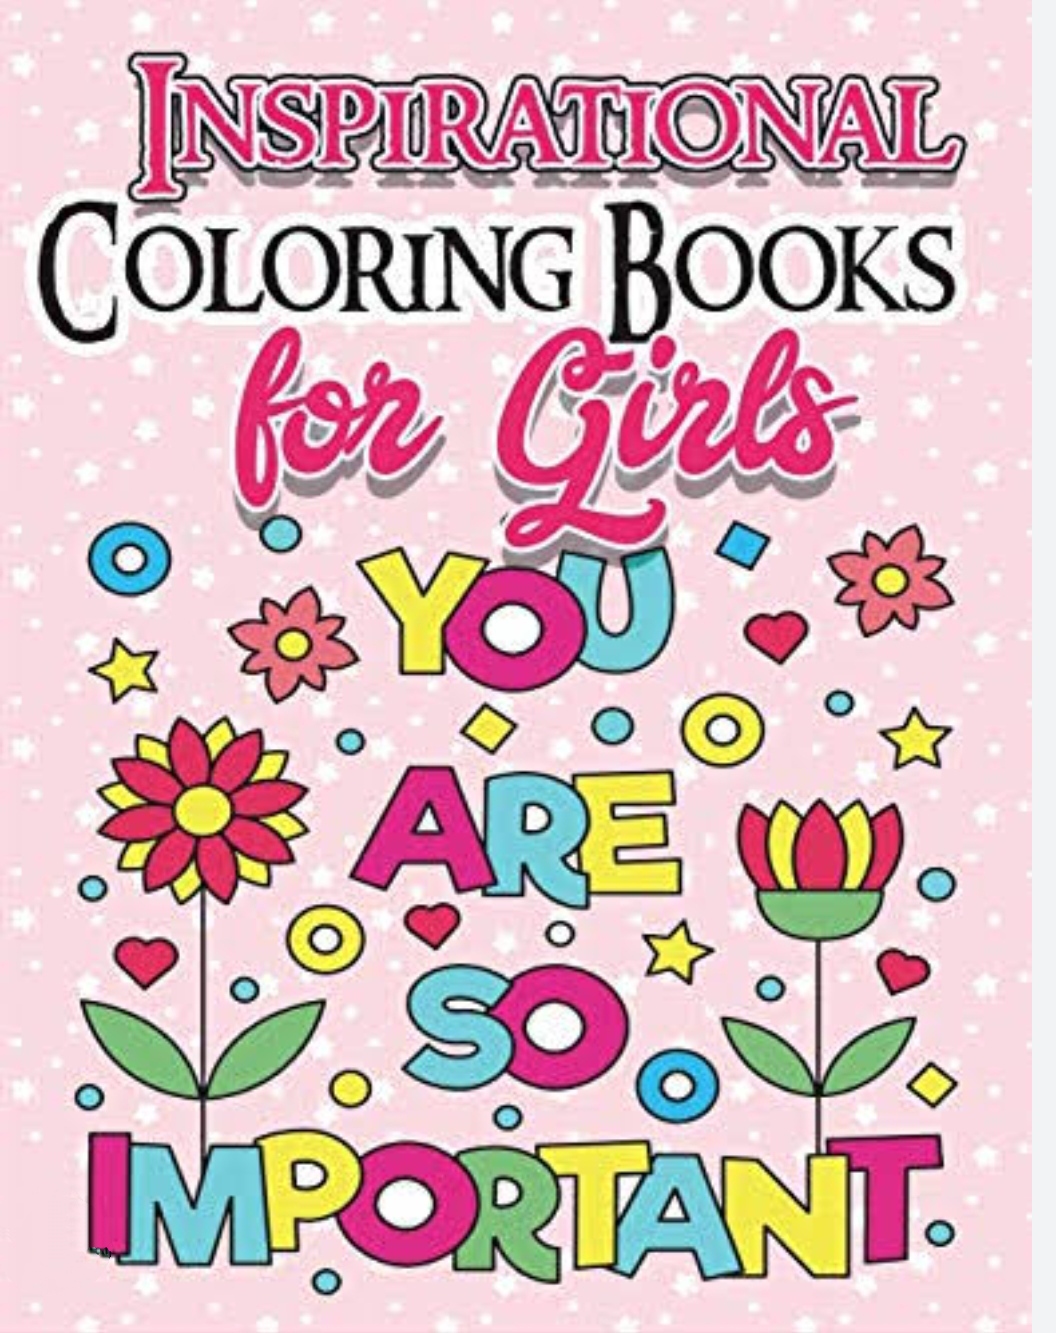 inspirational coloring books christmas gifts for a sad girl